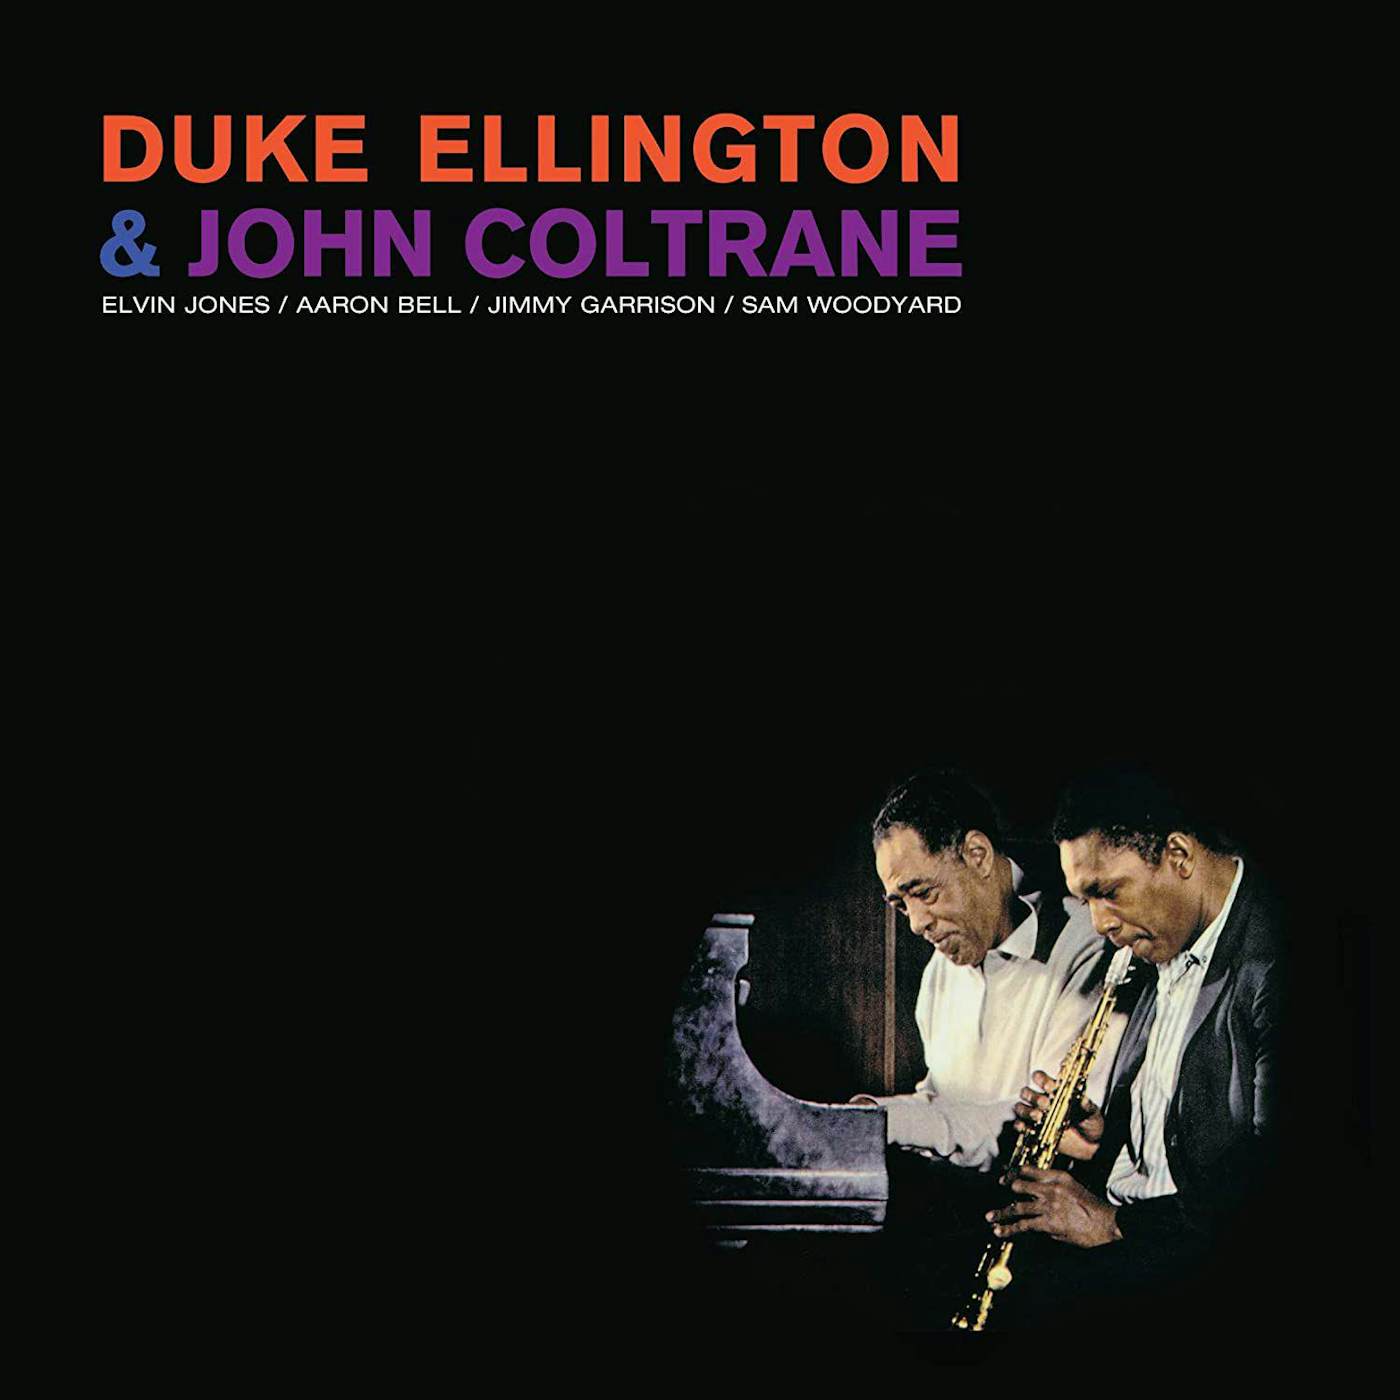 Duke Ellington & John Coltrane S/T Colored Vinyl Record - Limited Edition, 180 Gram Pressing